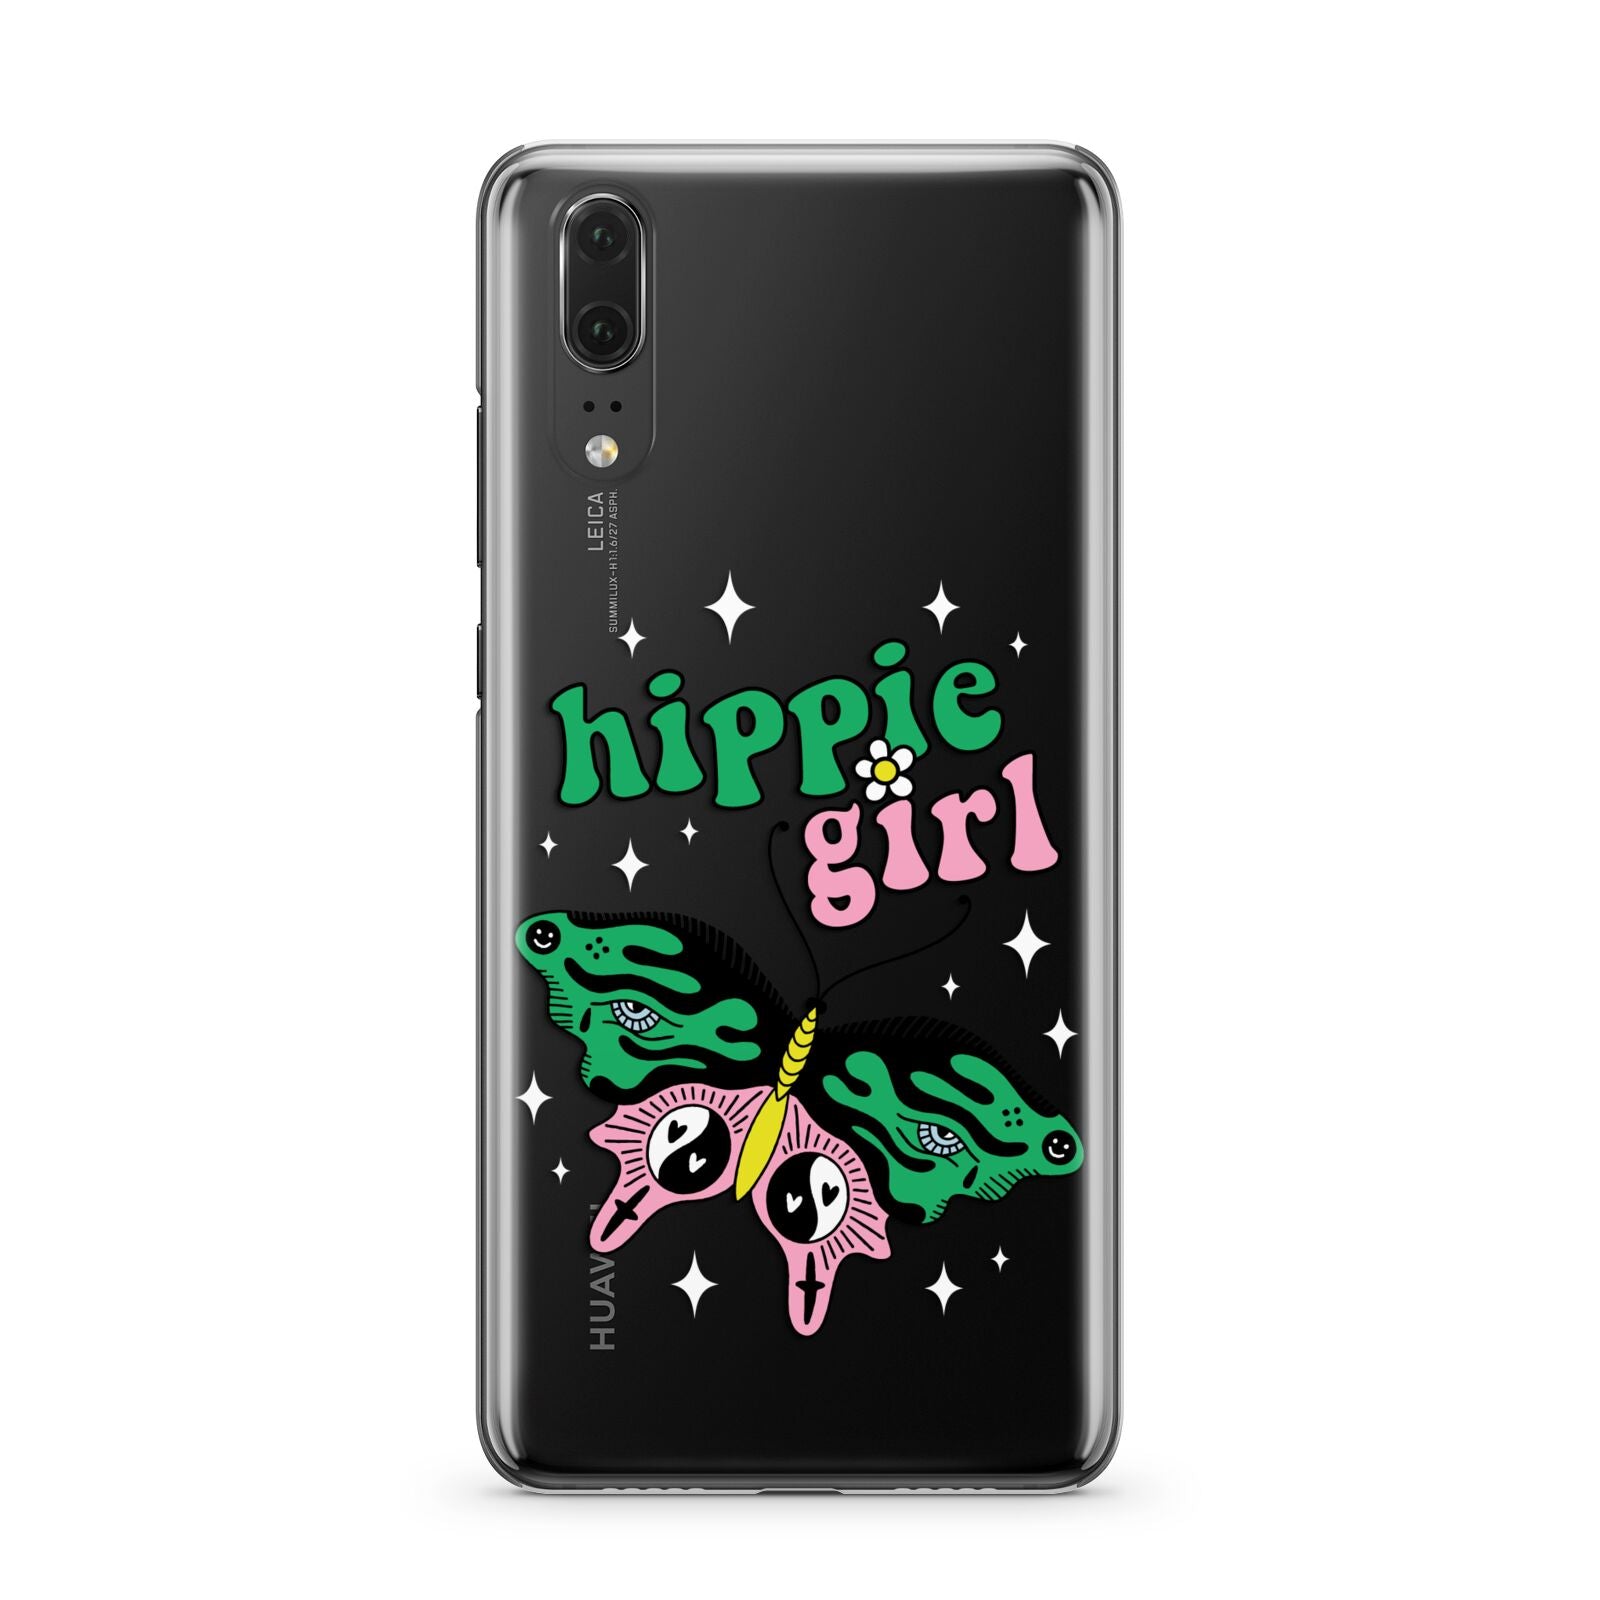 Hippie Girl Huawei P20 Phone Case